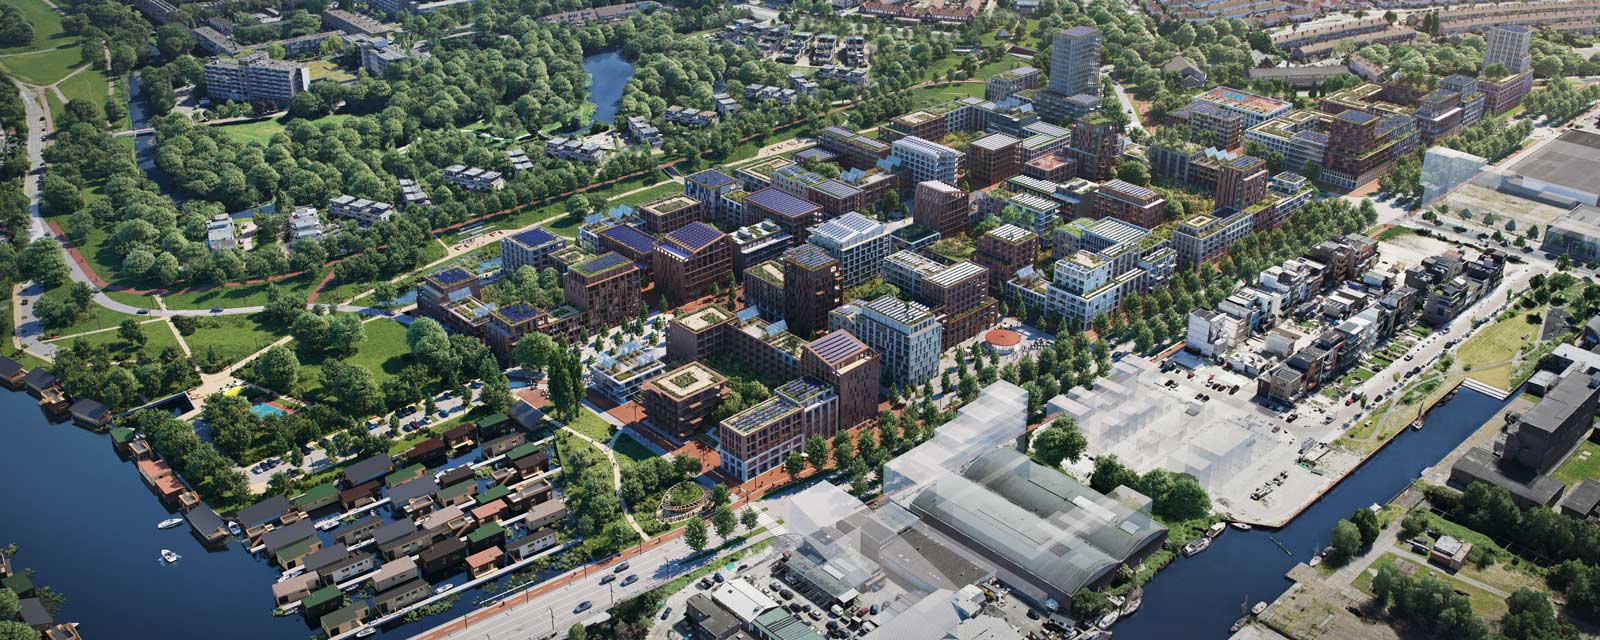 Klaprozenbuurt urban plan approved by Amsterdam’s City Council